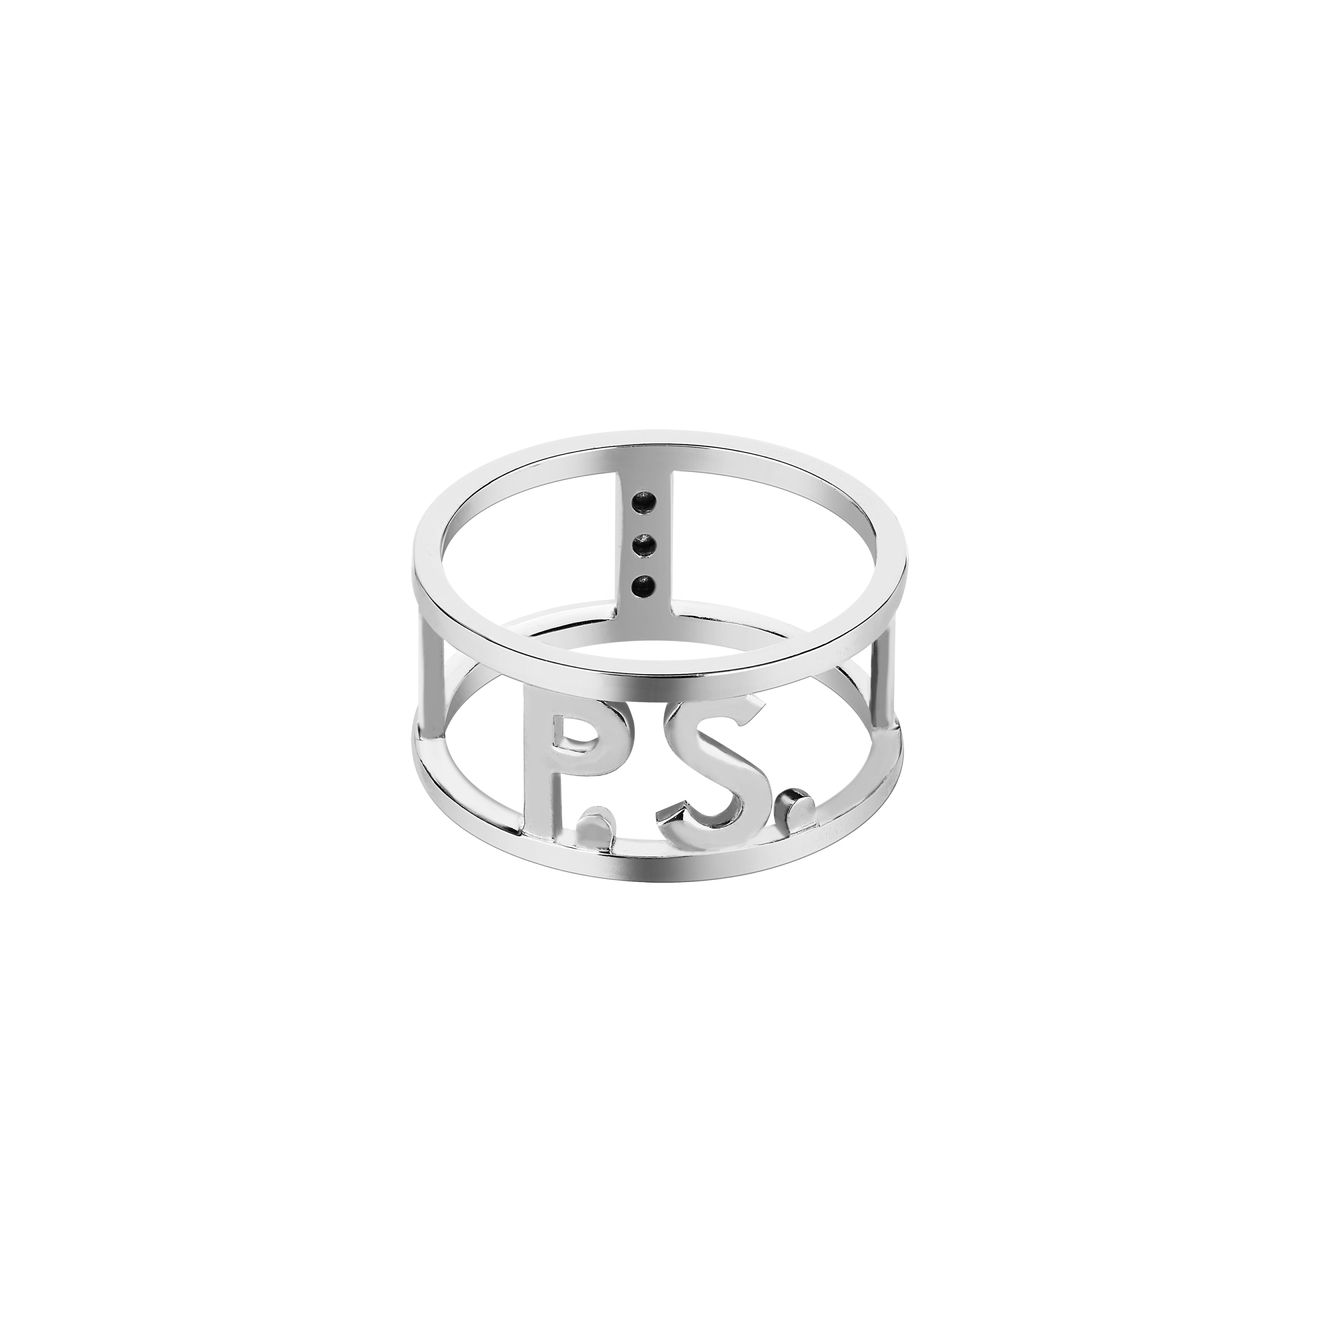 Phenomenal Studio Родированное кольцо с кристаллами и фирменным знаком P.S. Ring Rhodium кольцо phenomenal studio venus taurus ring 16 16 5